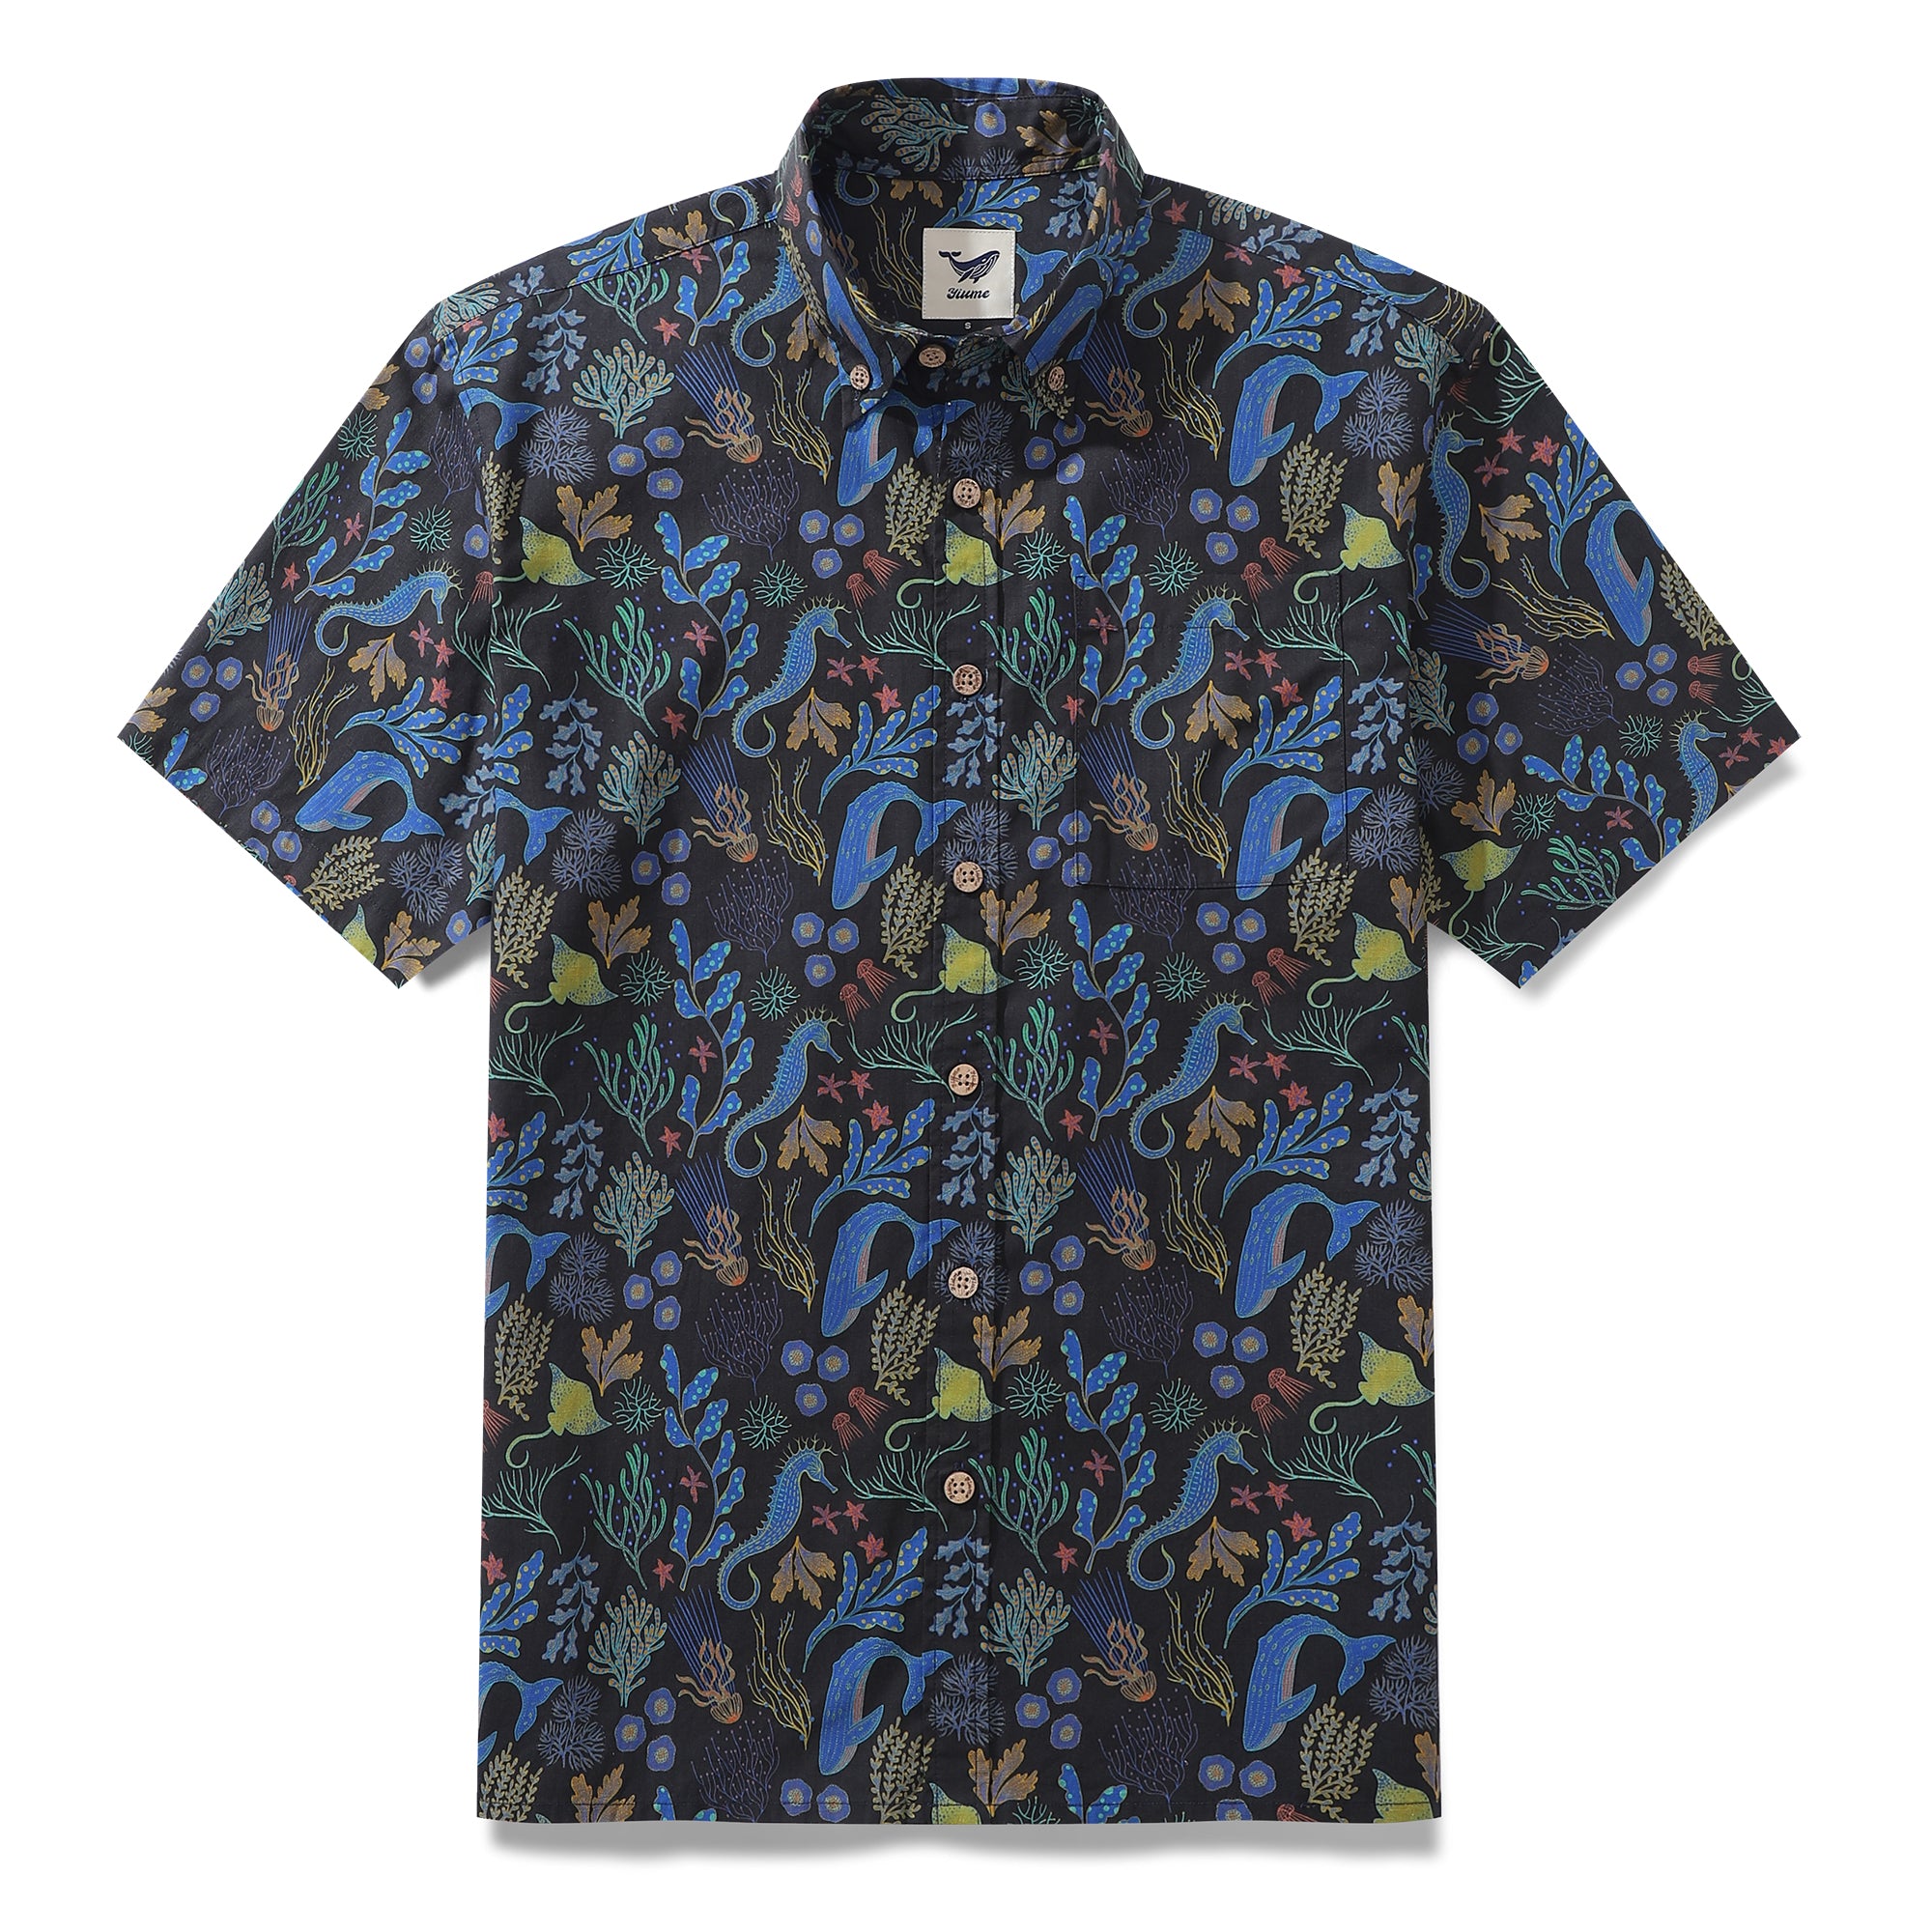 Men's Hawaiian Shirt Under the Sea Dreams Print Cotton Button-down Short Sleeve Aloha Shirt